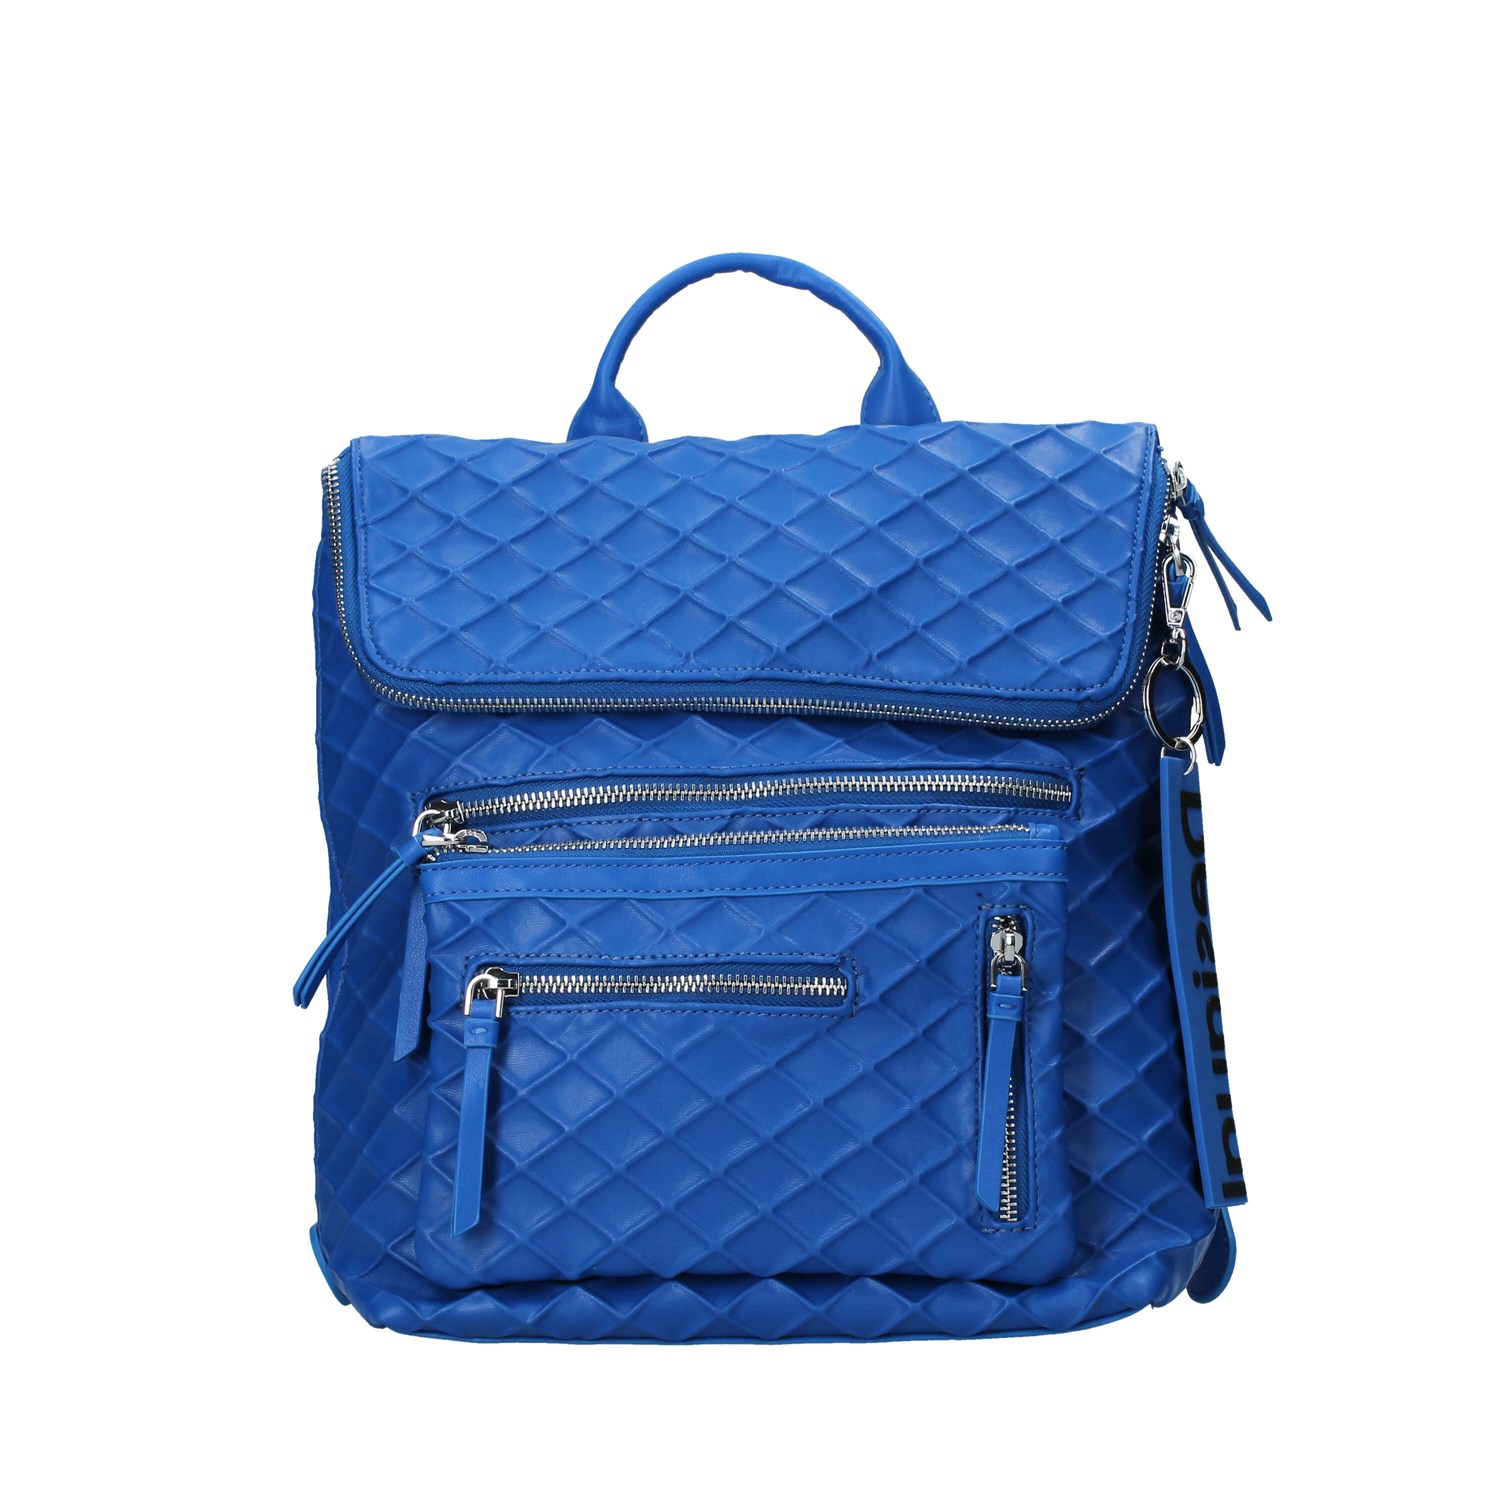 Desigual 23SAKP09 BLUE Bags Accessories